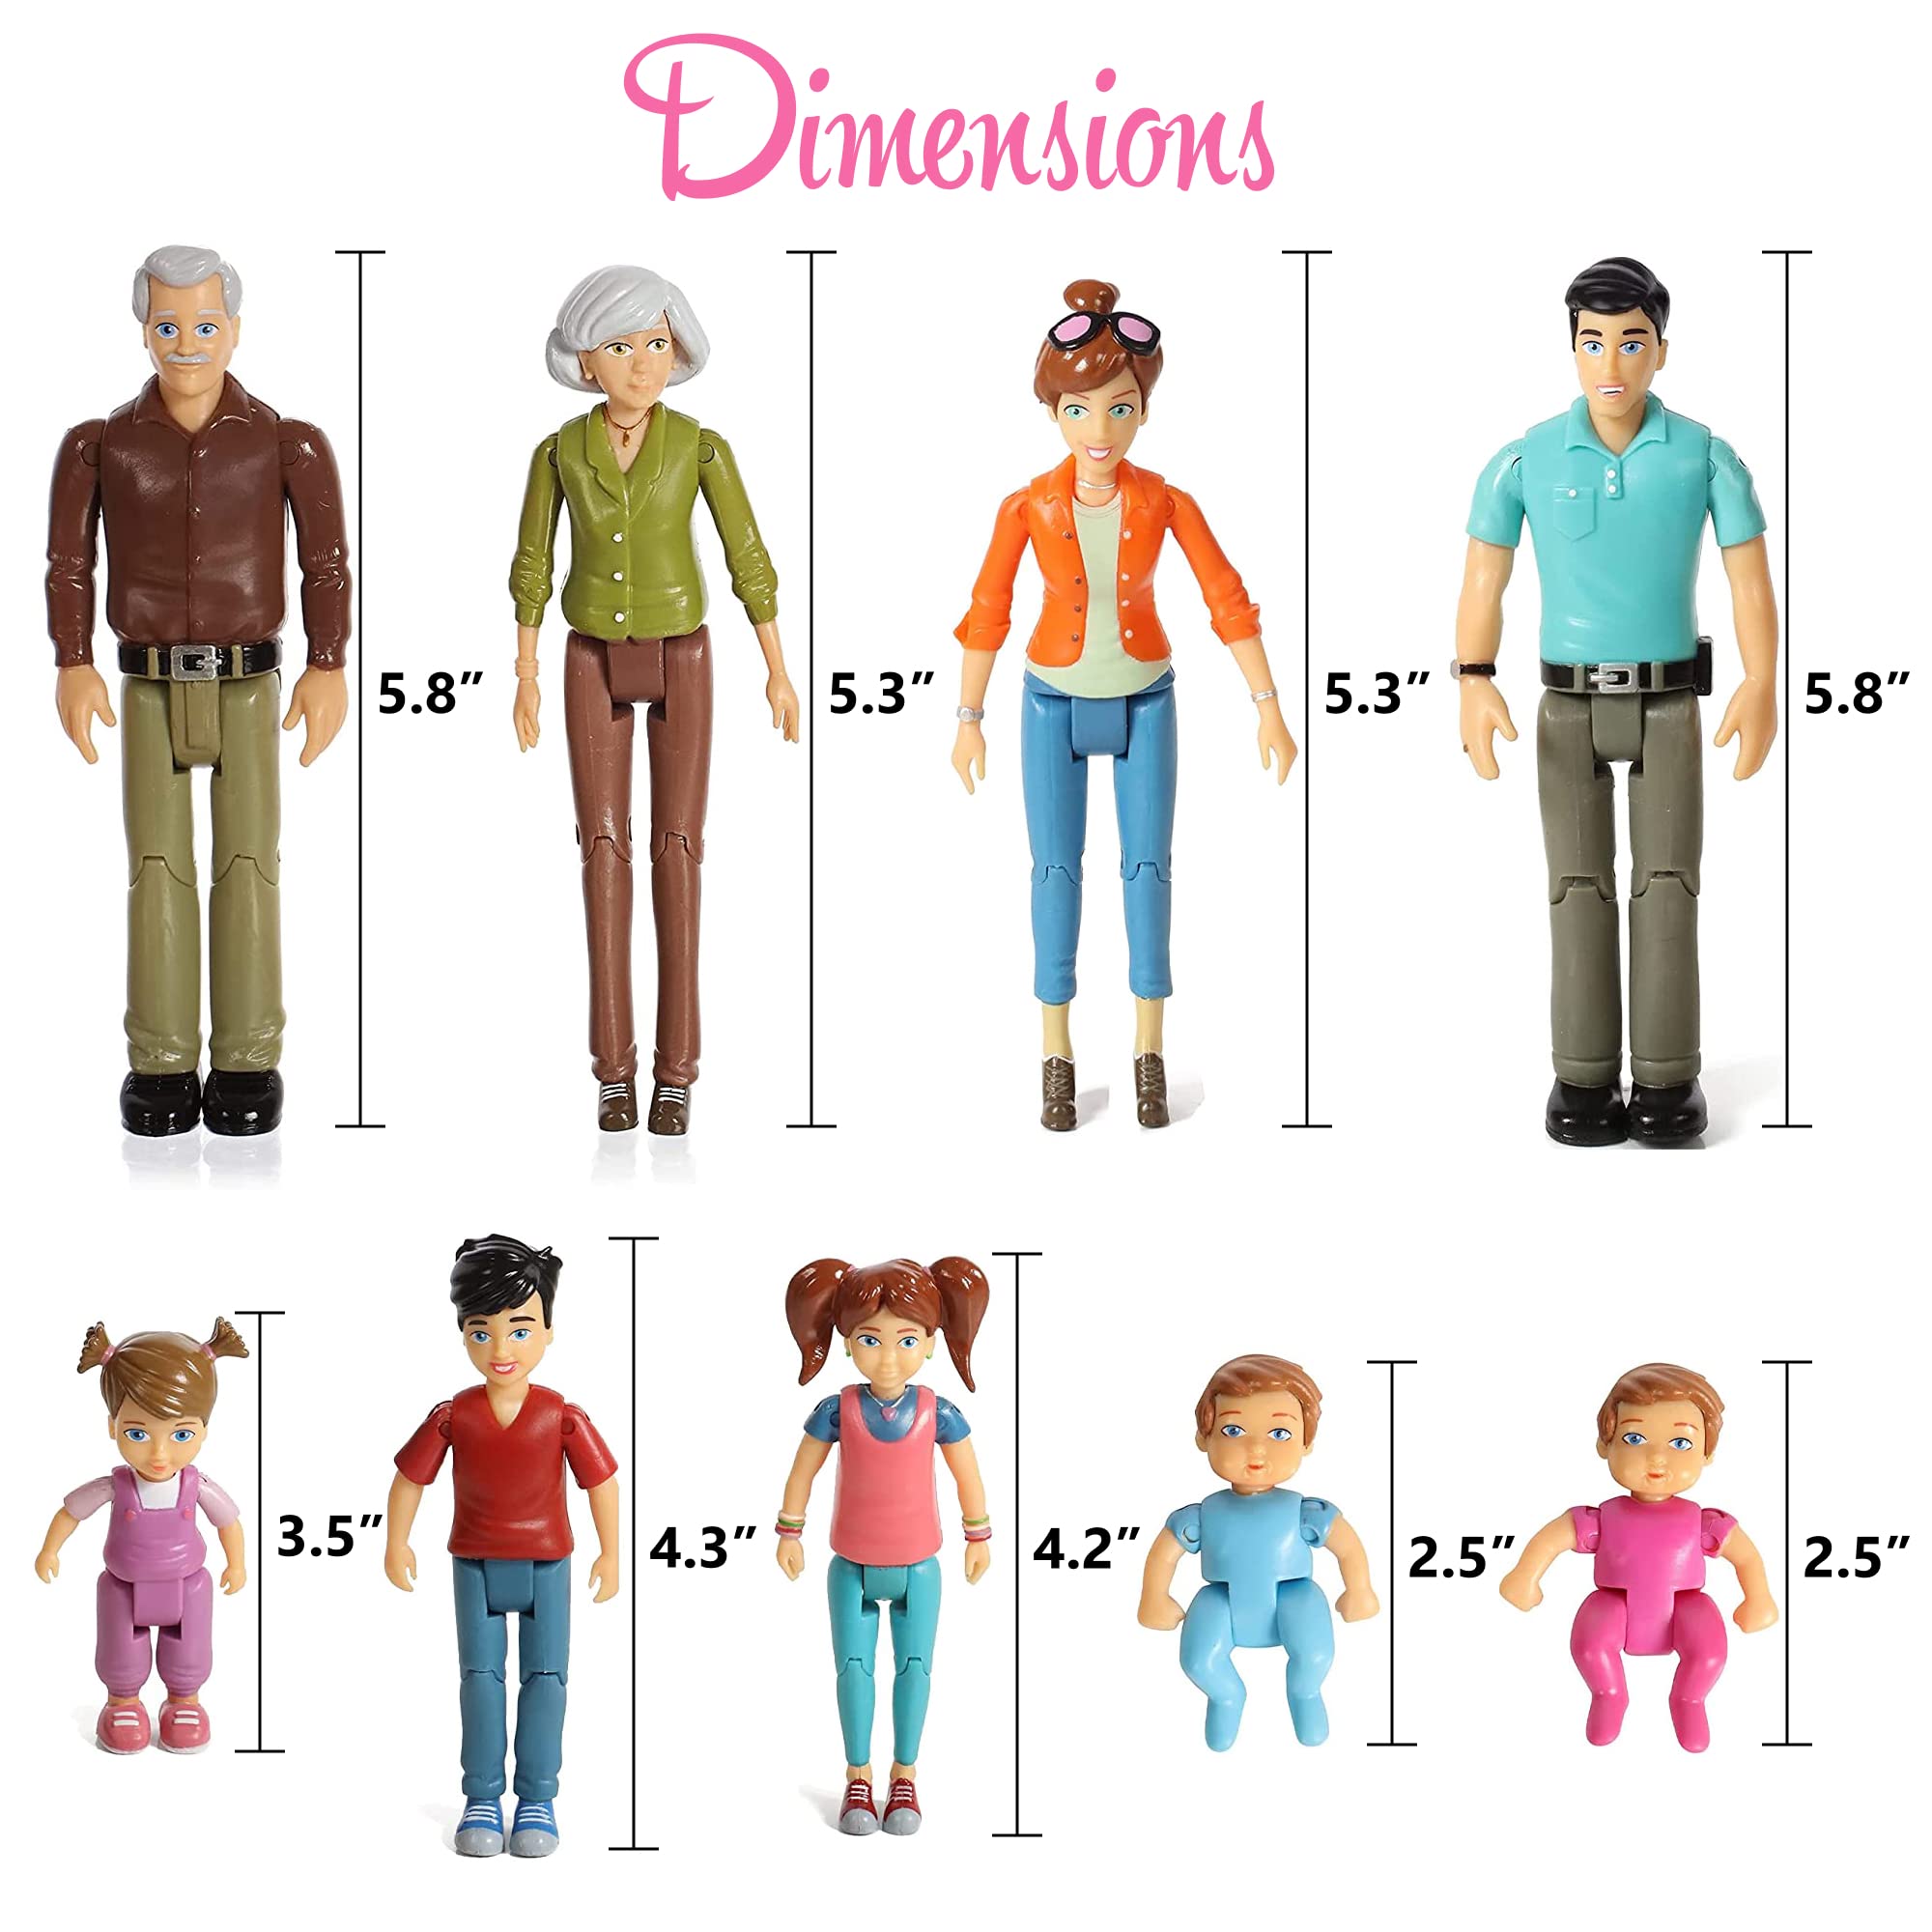 Sweet Li'l Family Dollhouse People Set of 9 Action Figure Set - Grandpa, Grandma, Mom, Dad, Sister, Brother, Toddler, Twin Boy & Girl